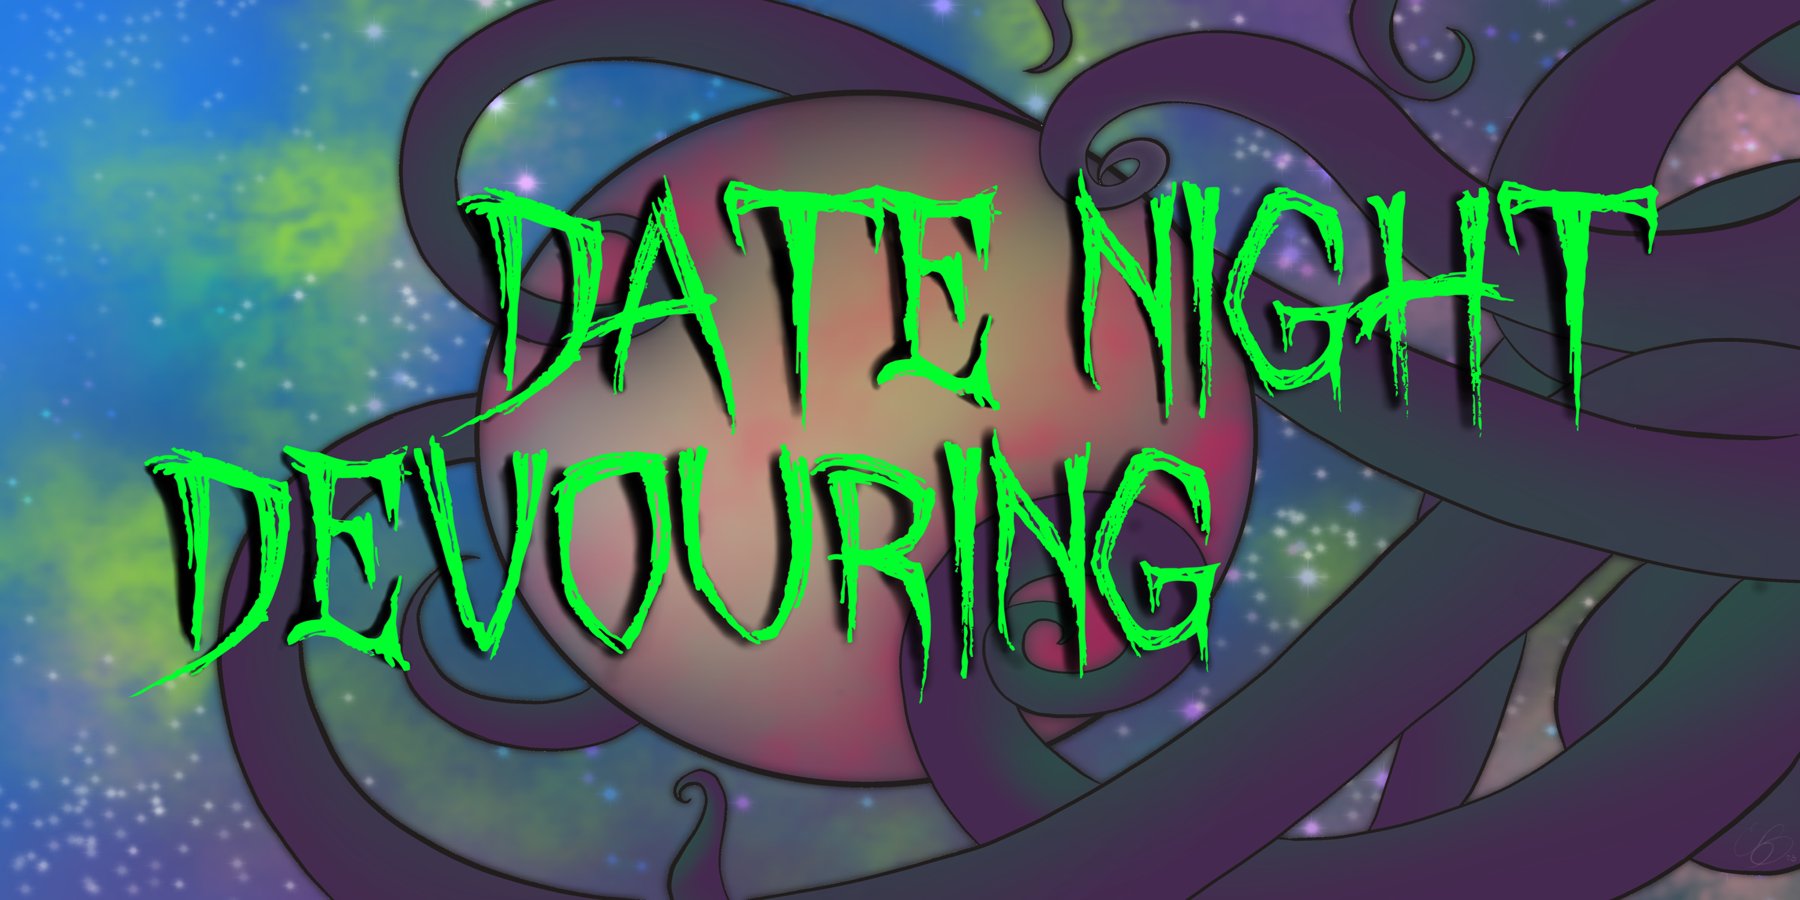 Date Night Devouring